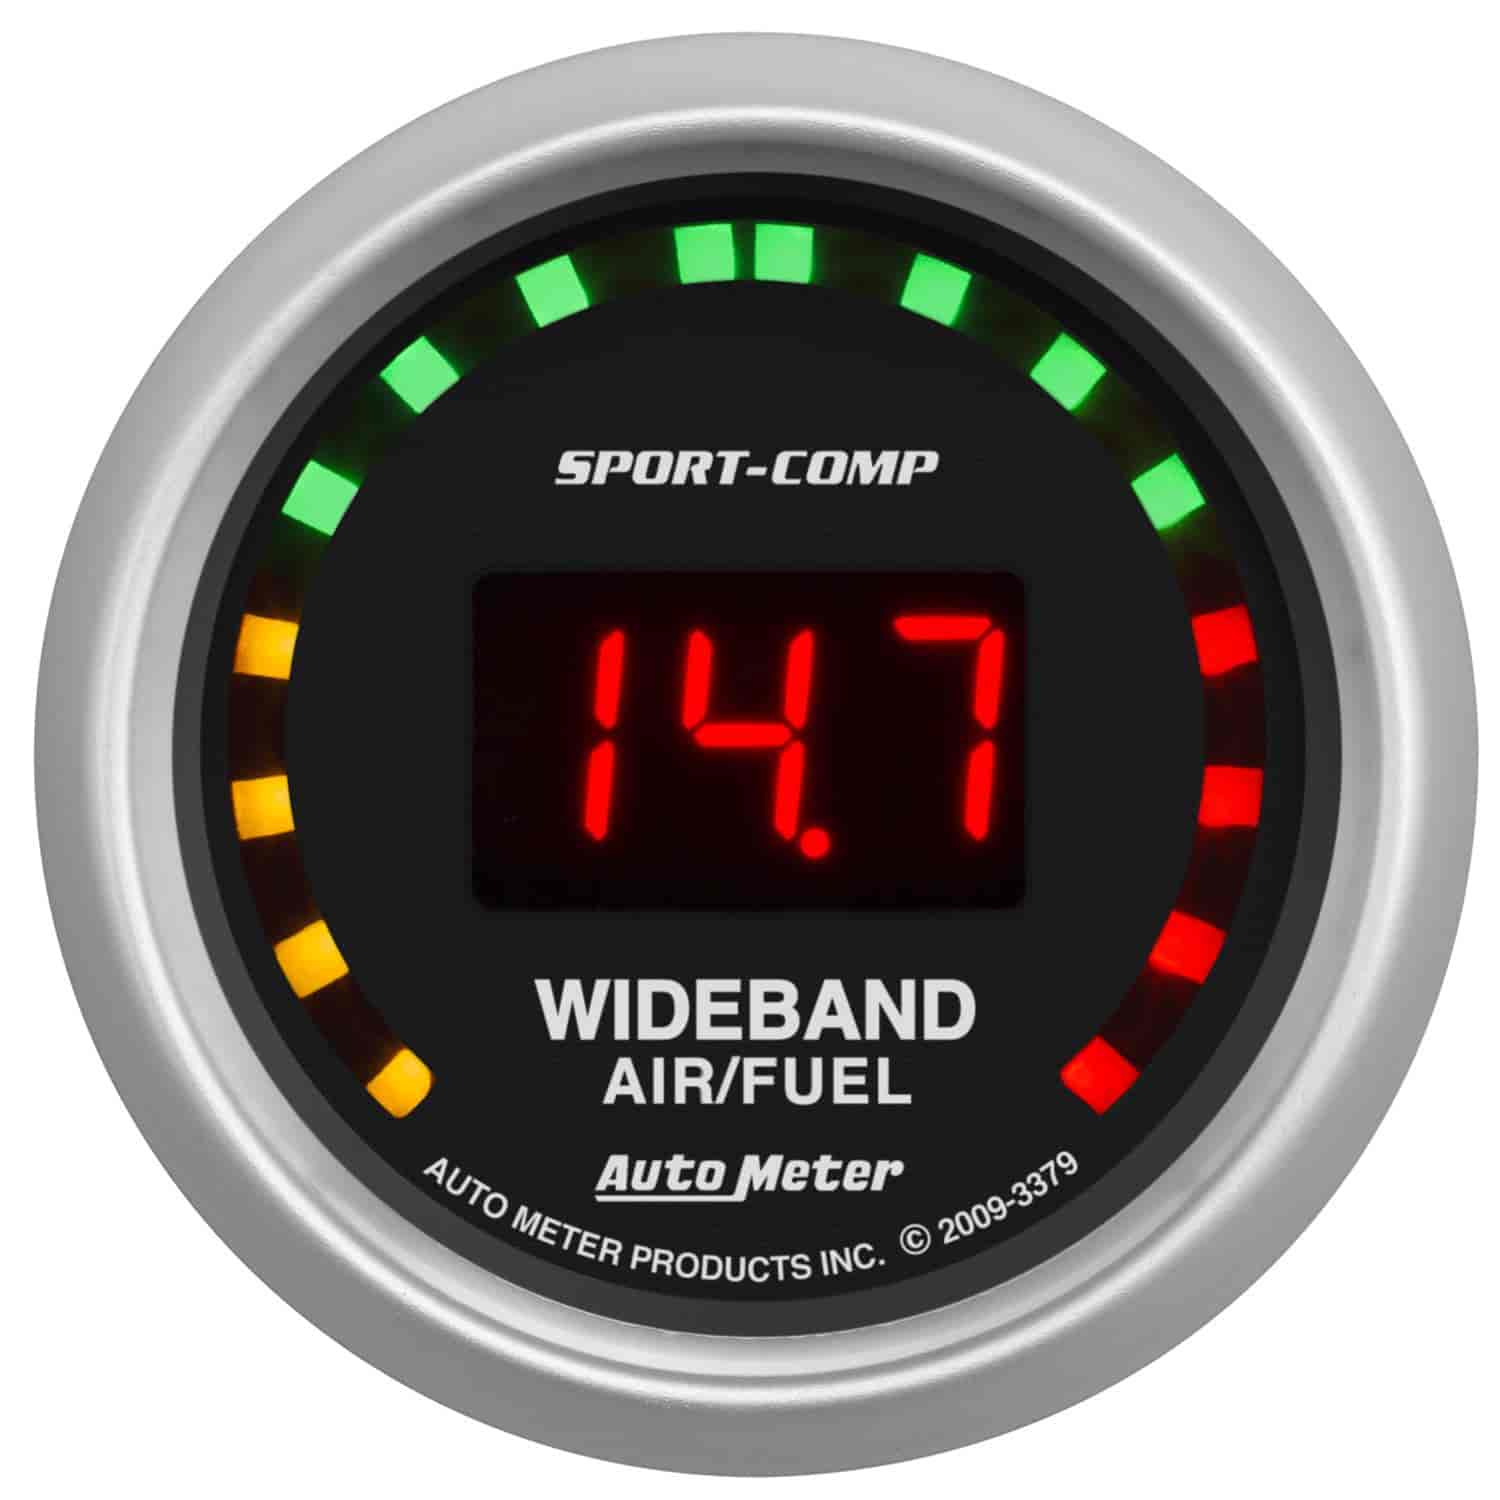 Sport-Comp Wideband Air/Fuel Gauge 2-1/16